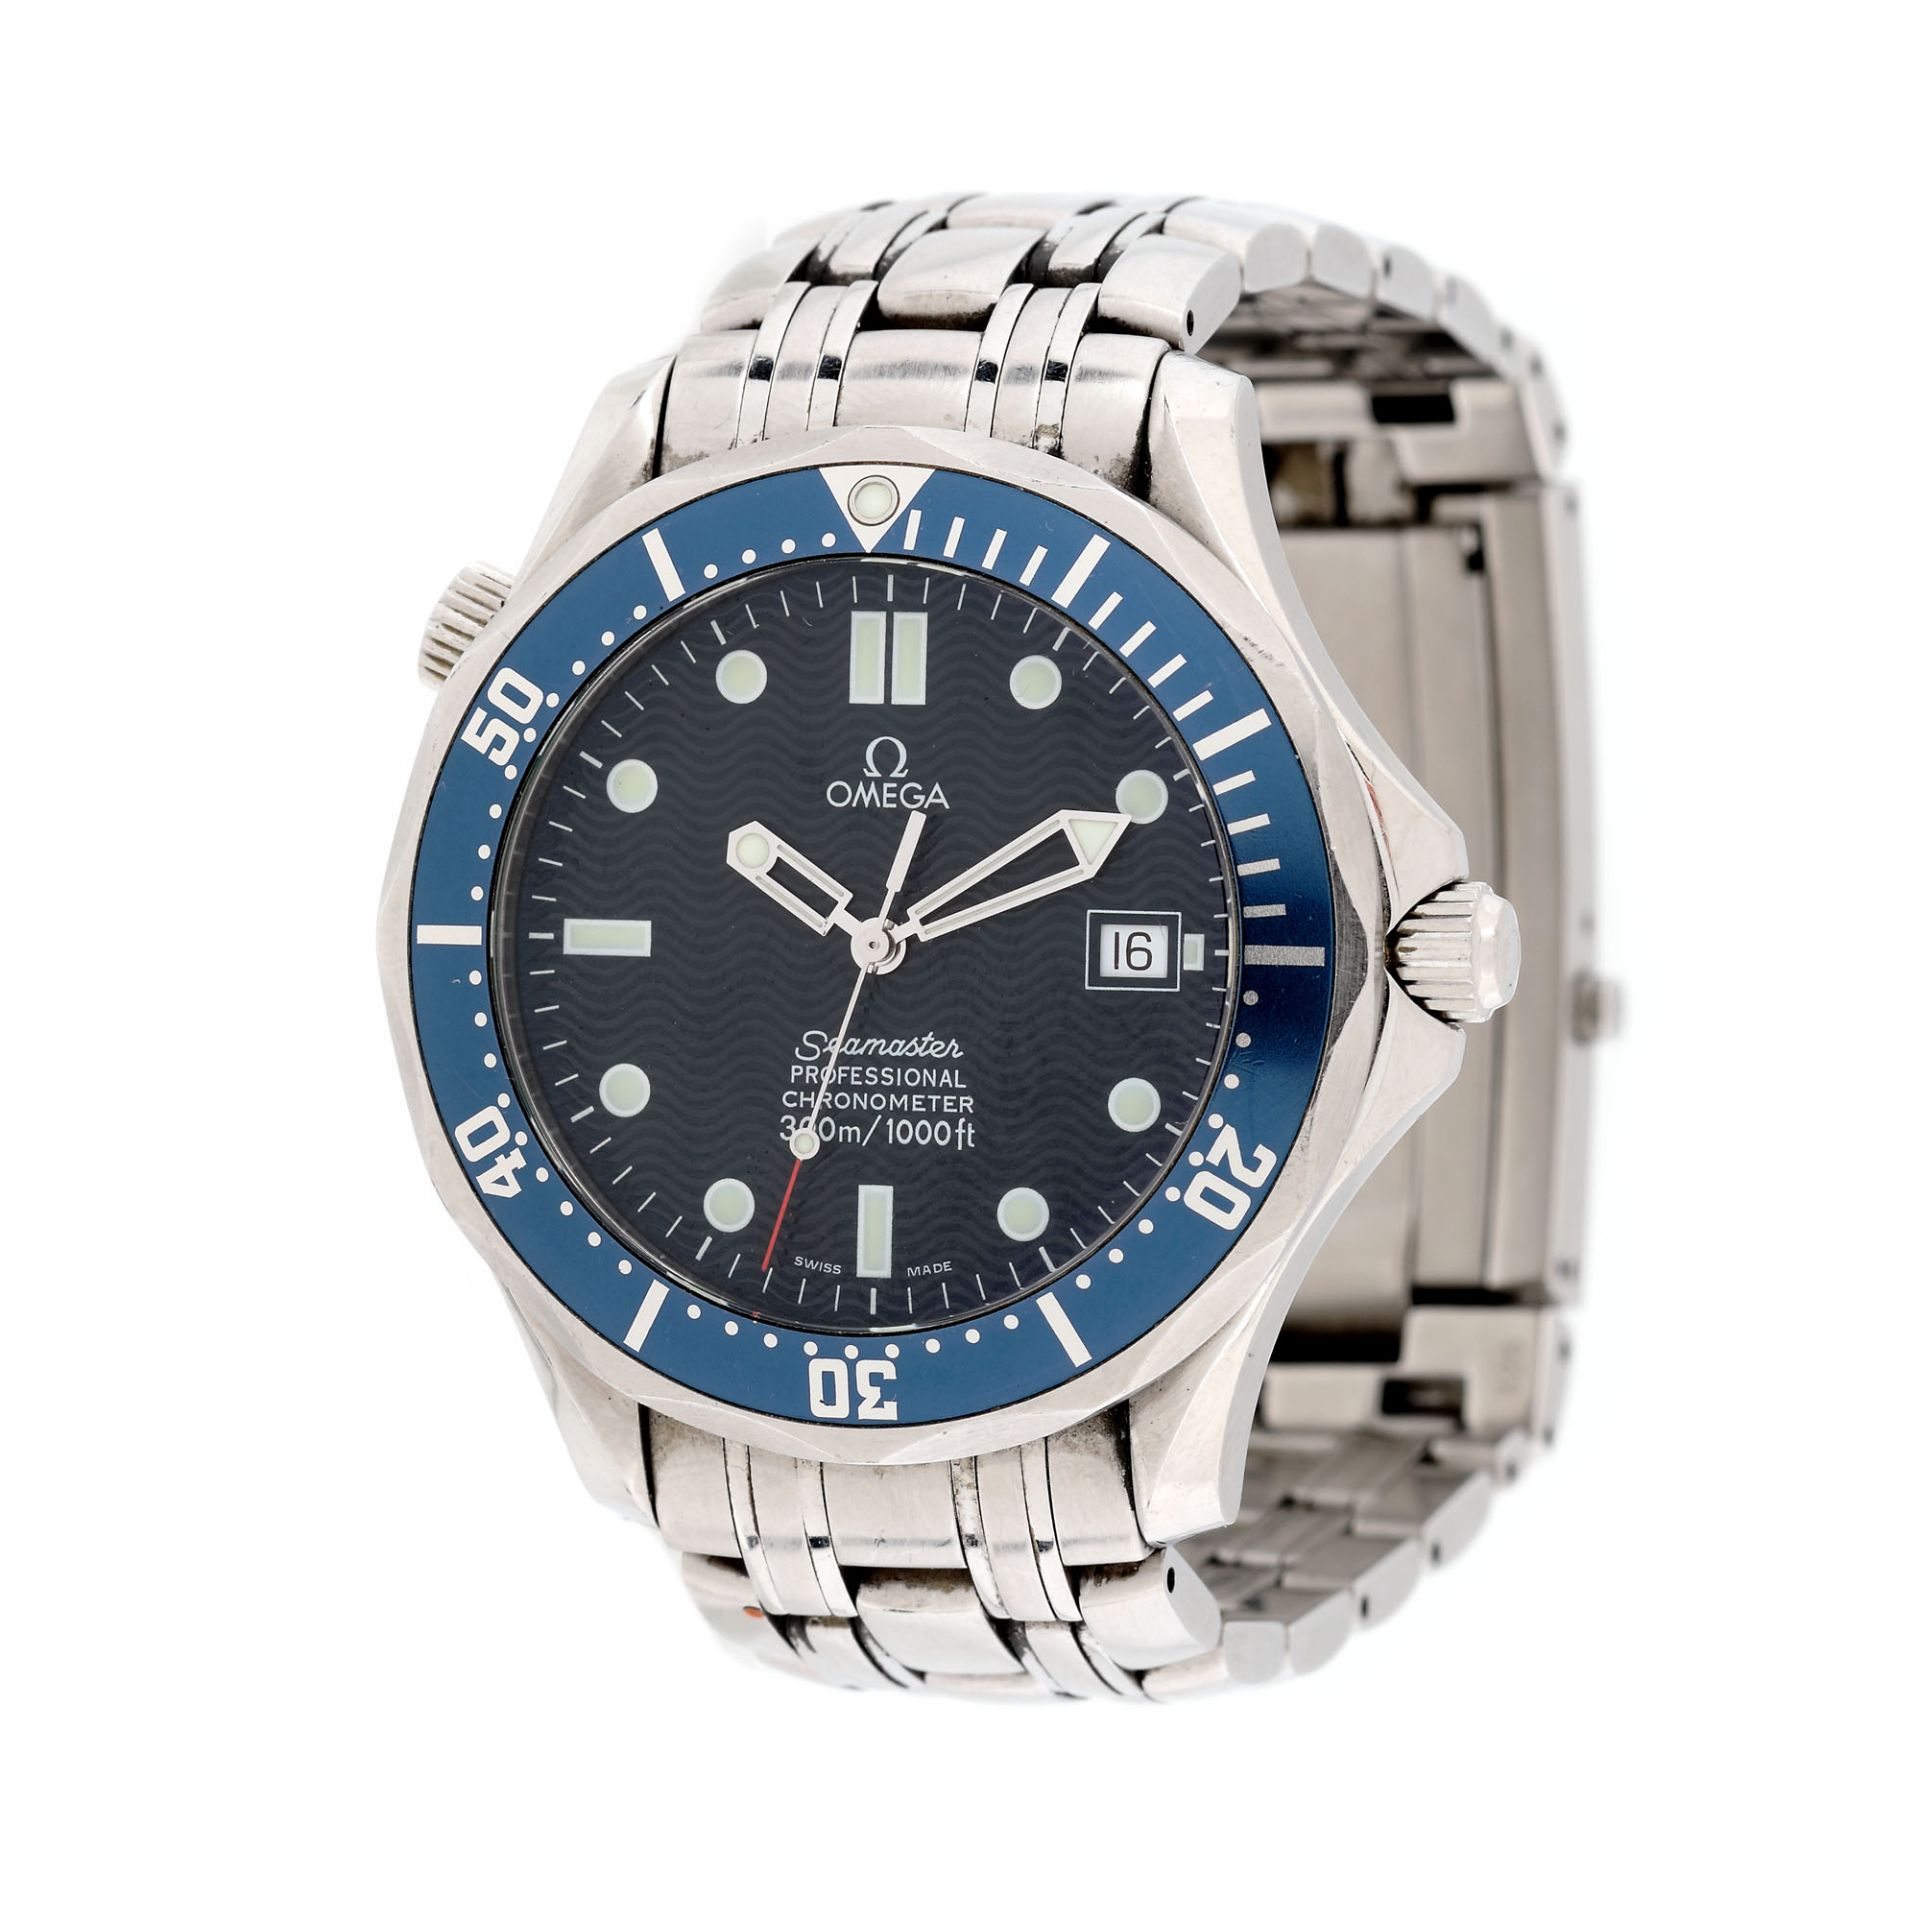 Omega Seamaster Professional wristwatch, men